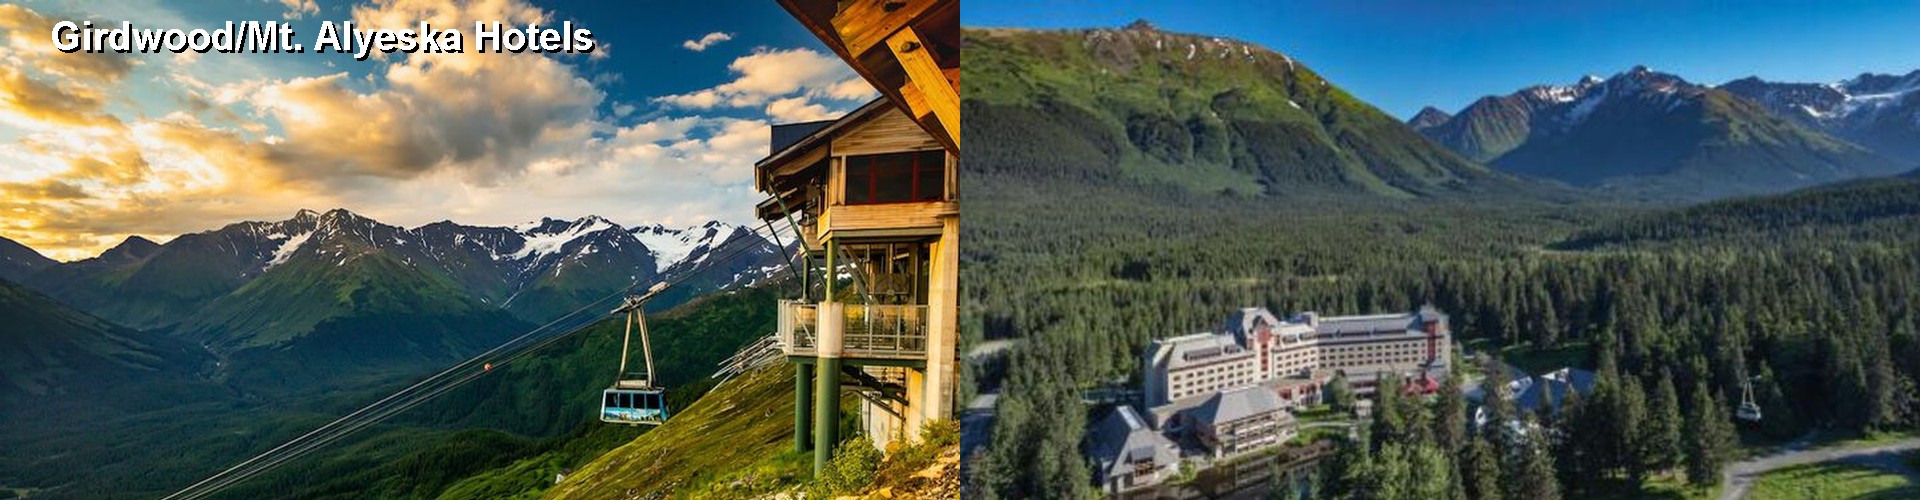 5 Best Hotels near Girdwood/Mt. Alyeska